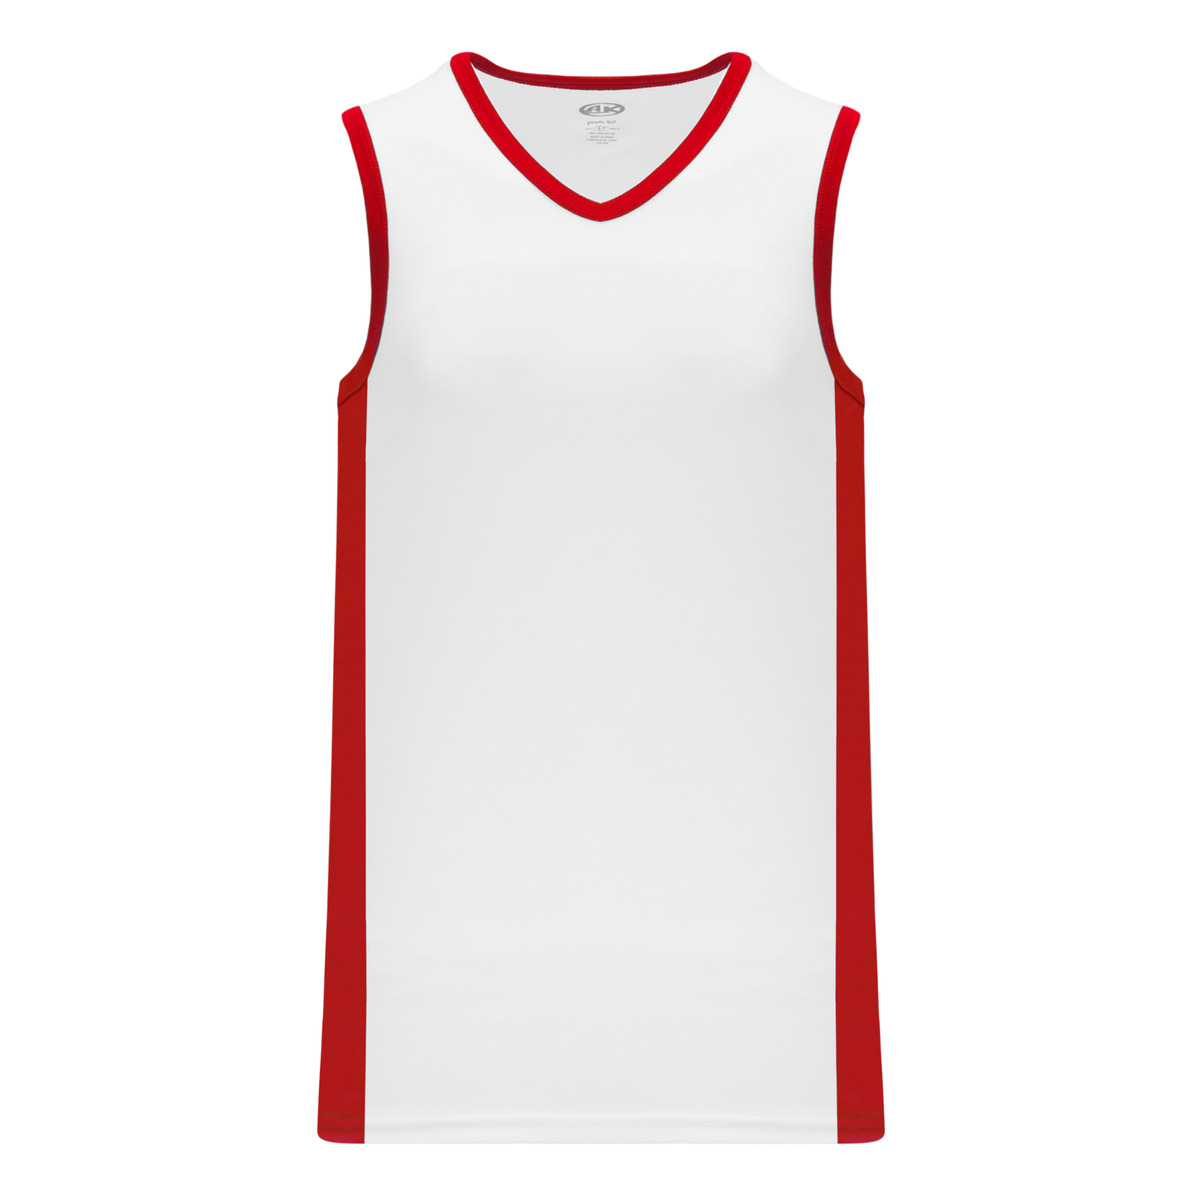 red blank basketball jersey